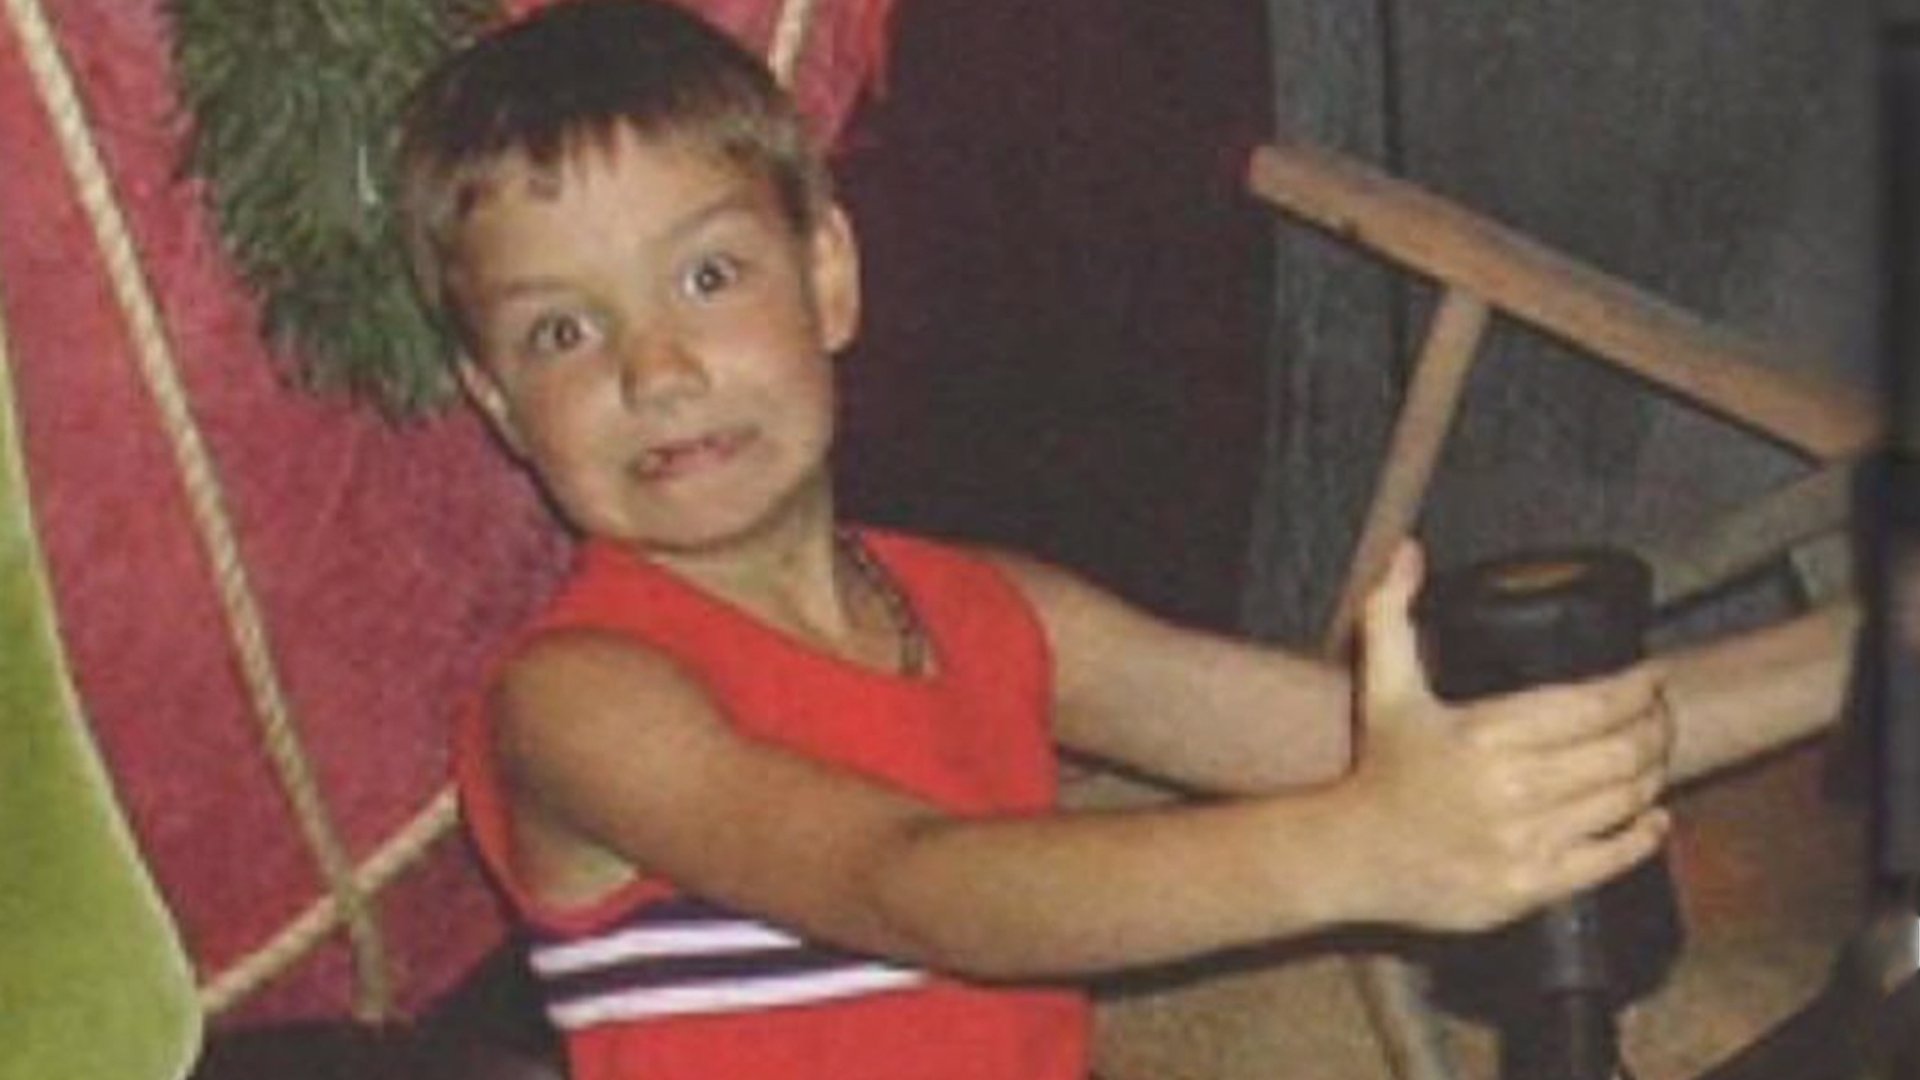 A childhood photo of Liam Payne